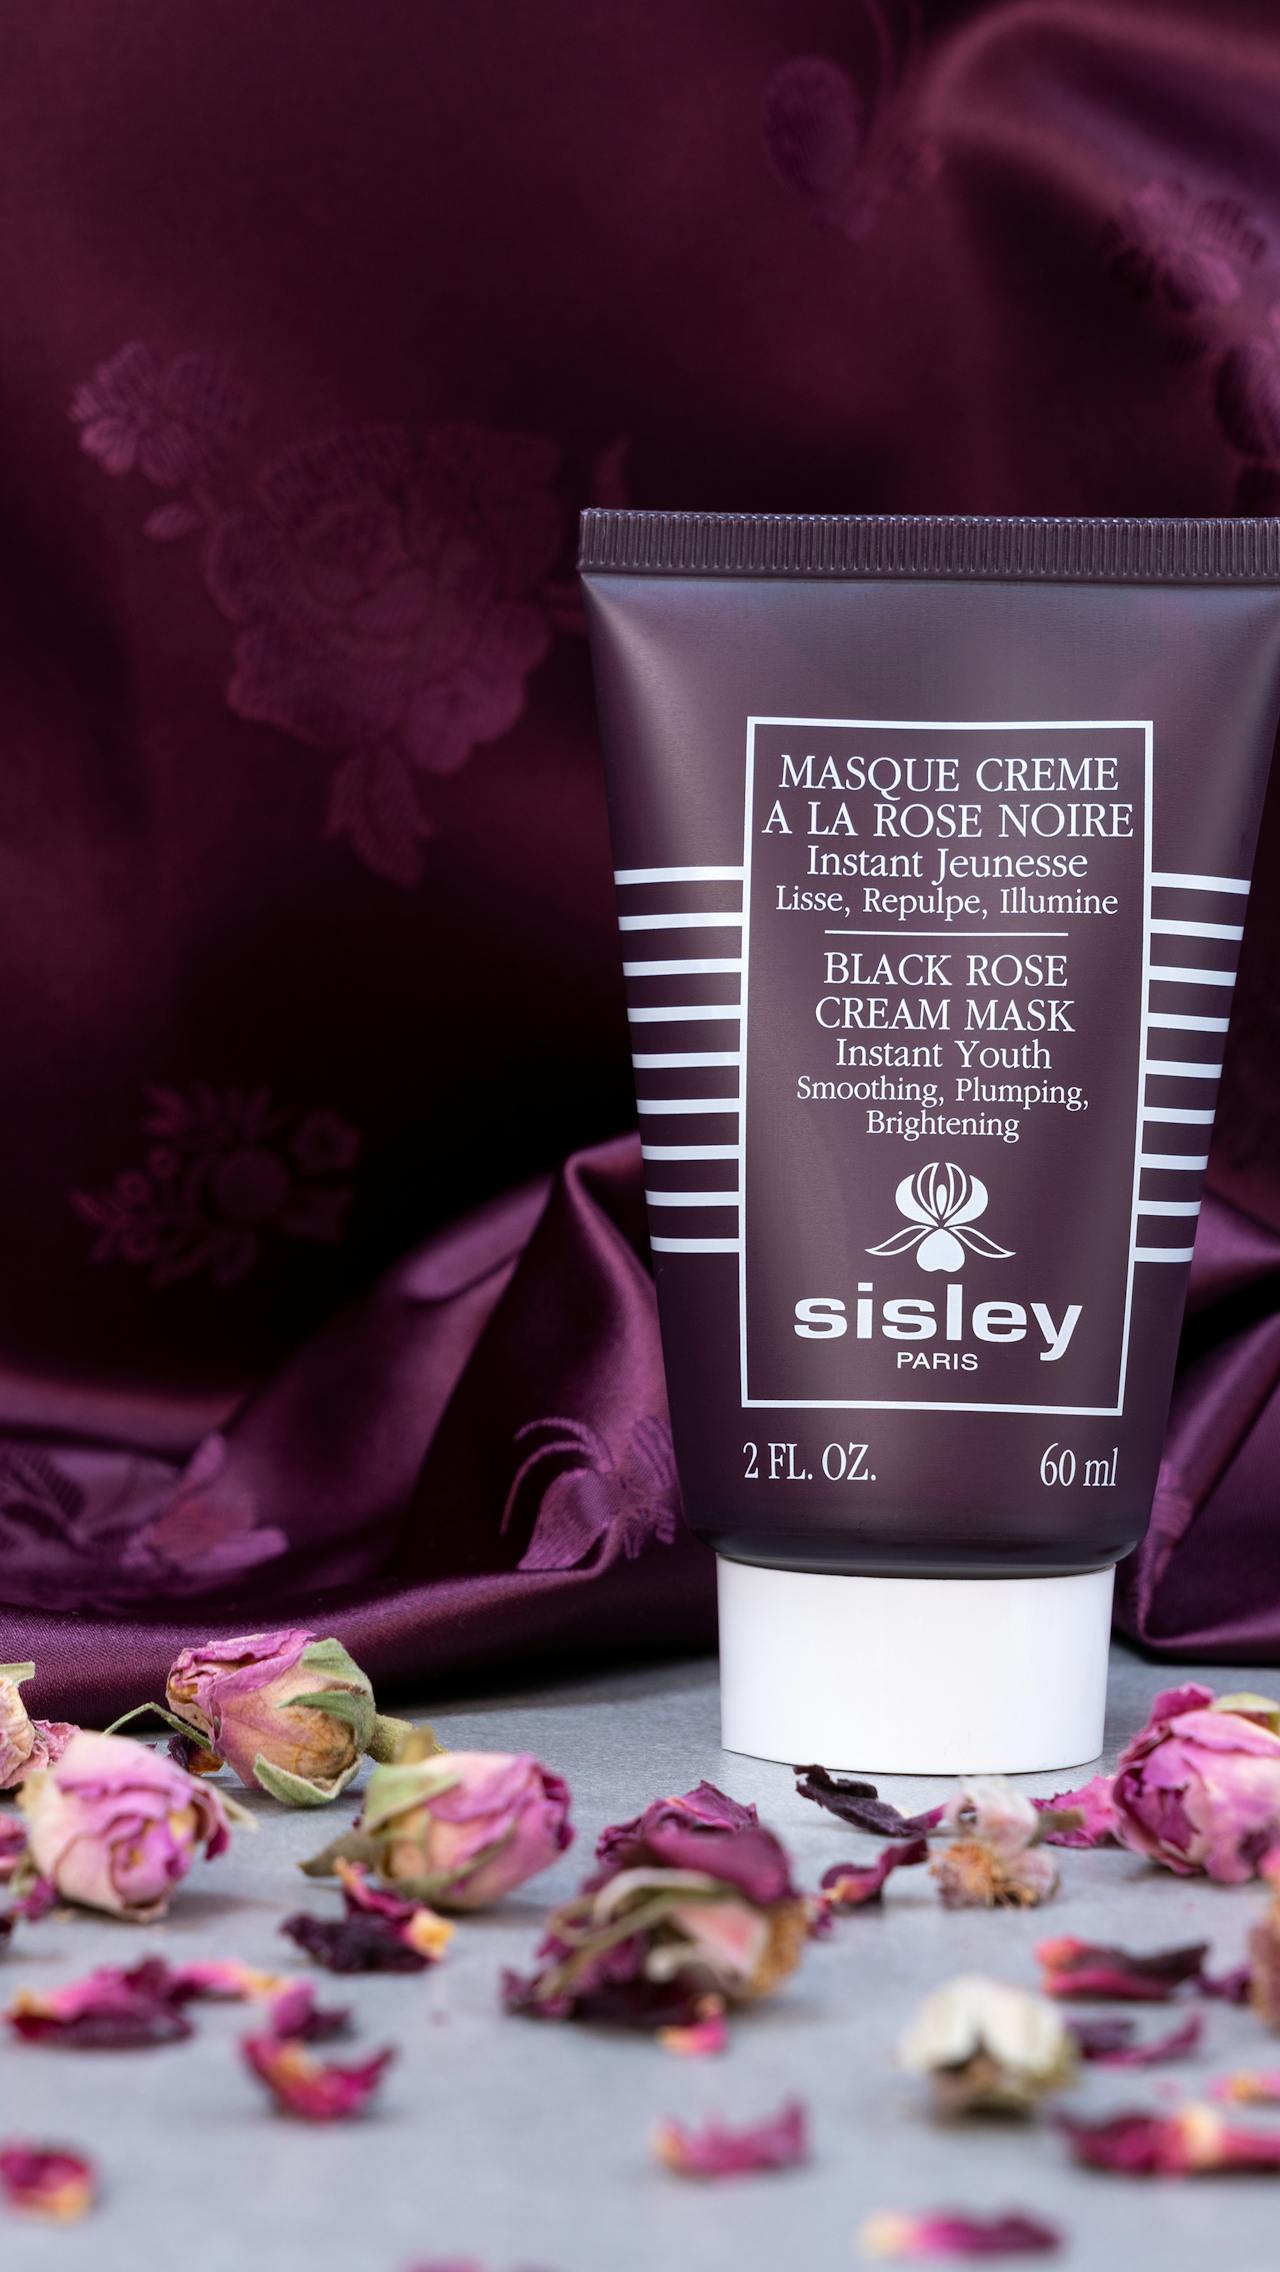 Forkert dukke Derved Review: Sisley Black Rose Cream Mask | BTY ALY